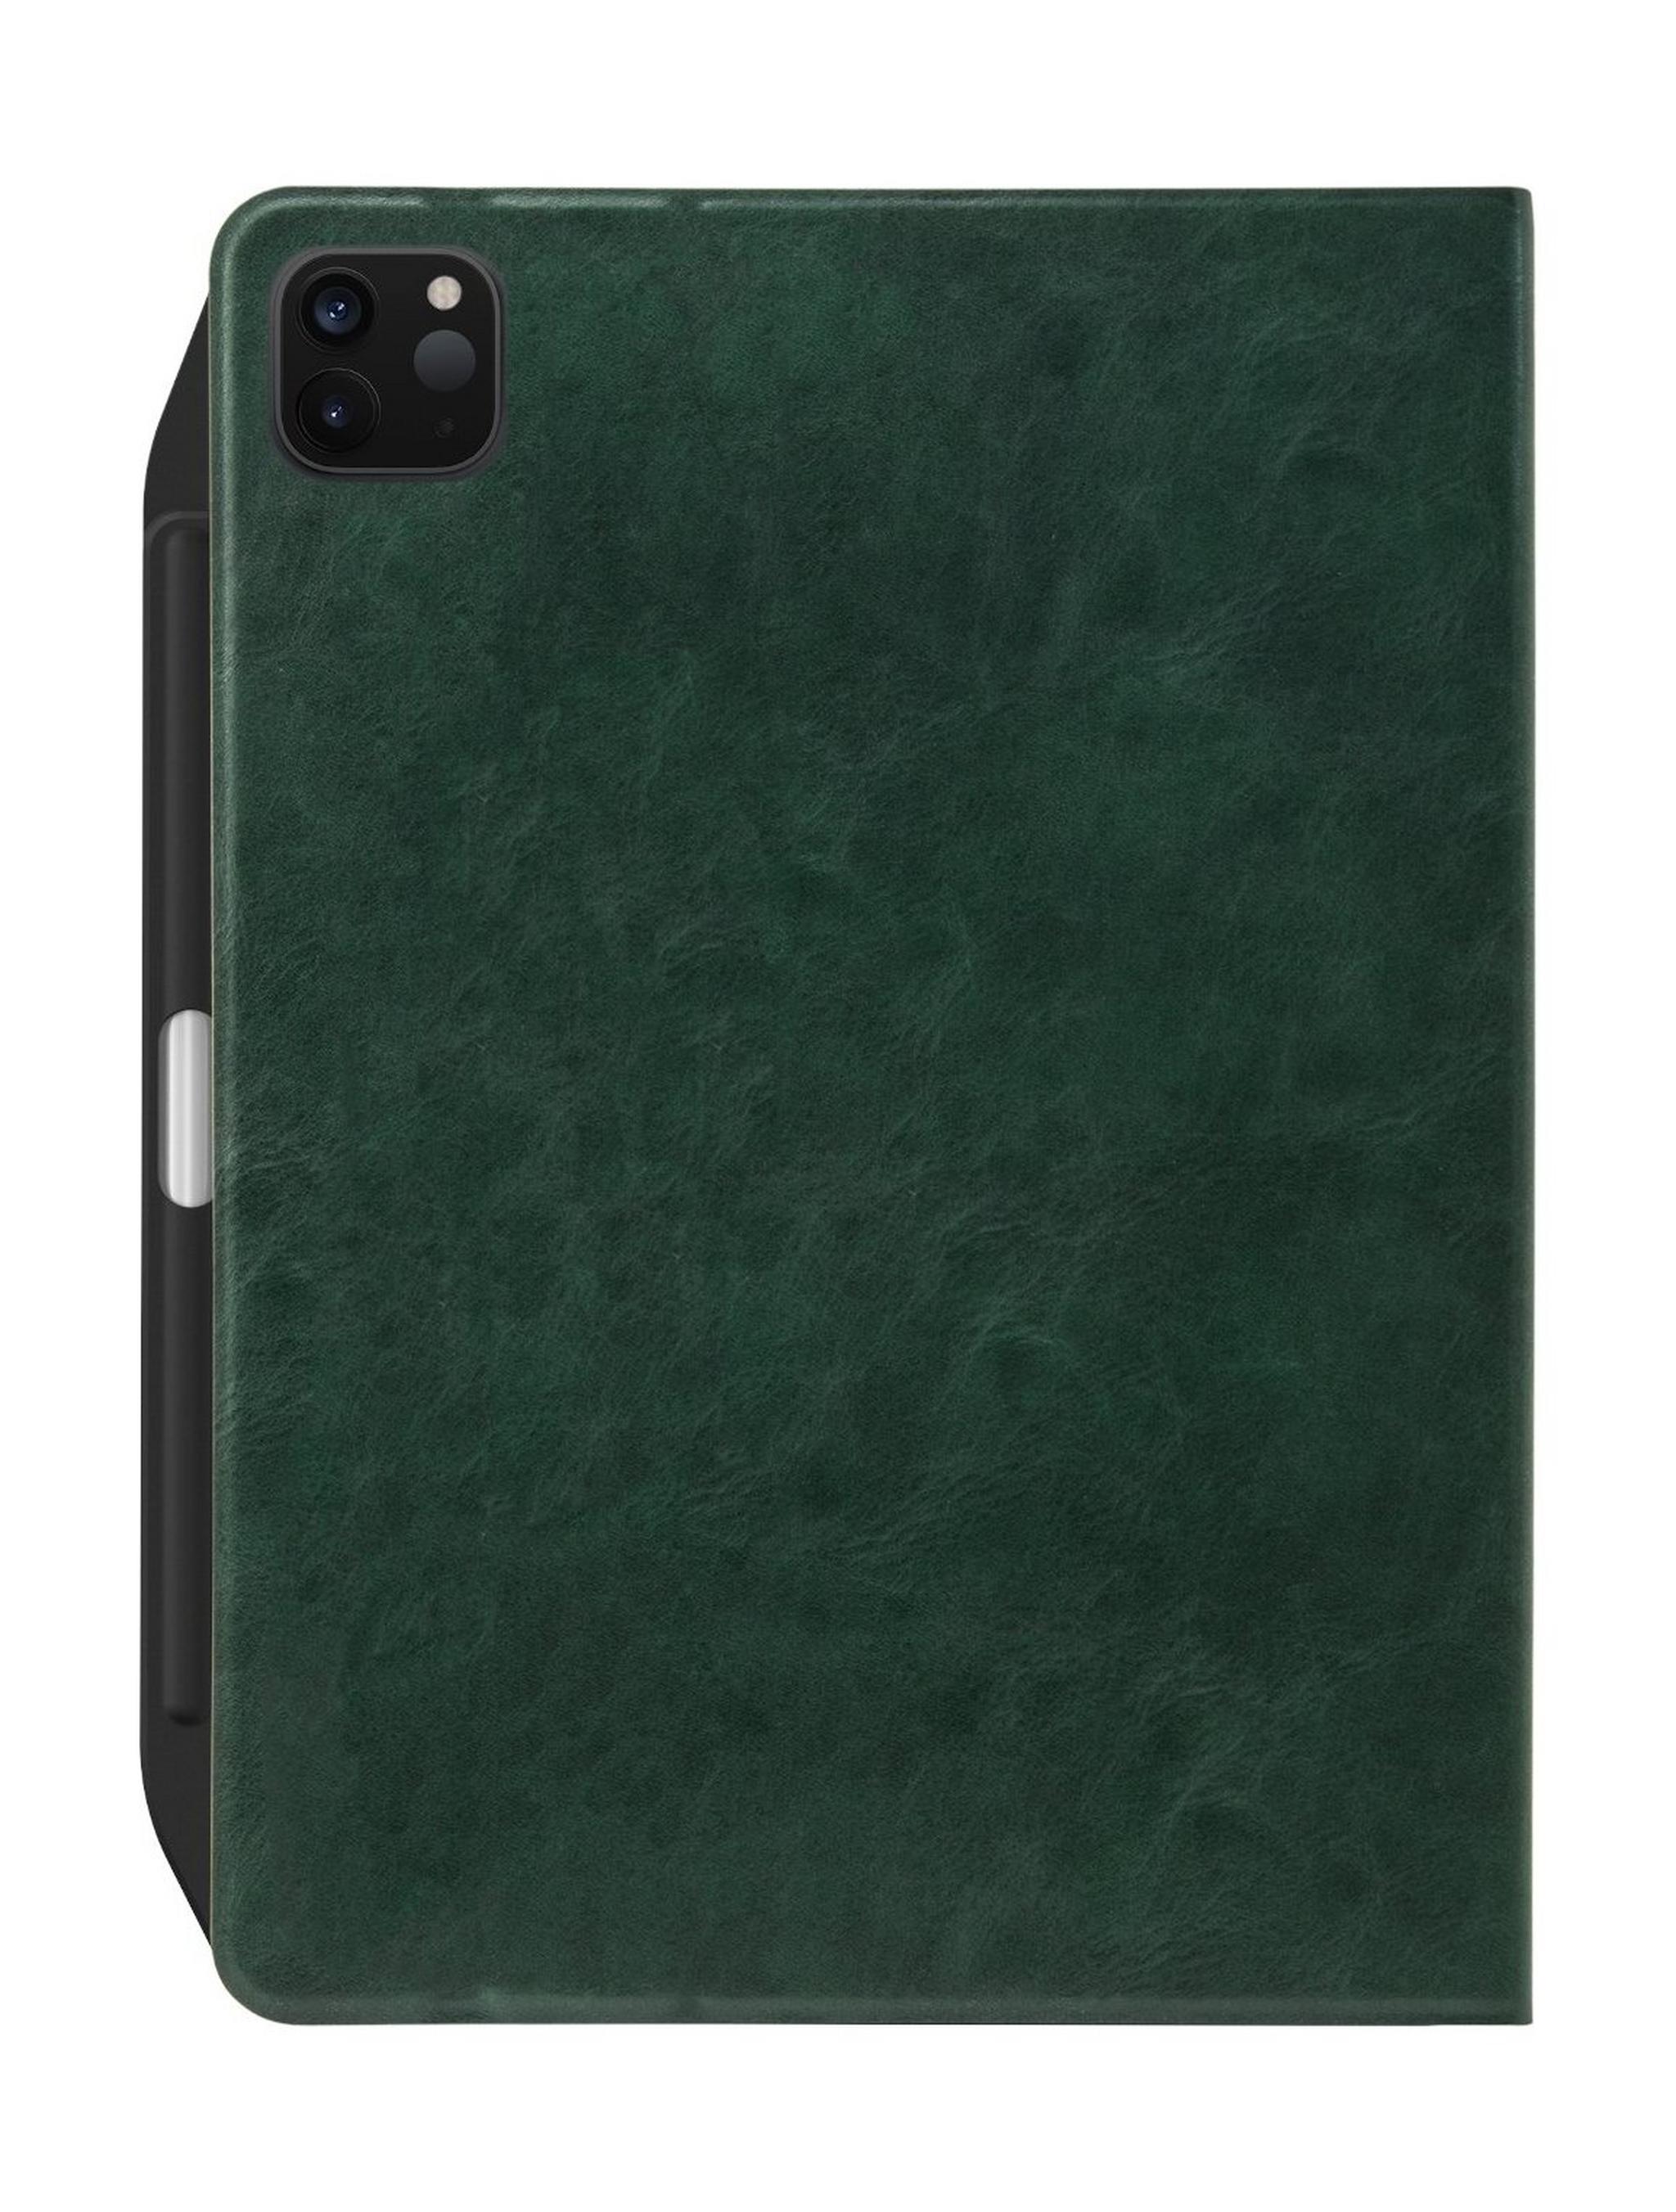 Switcheasy CoverBuddy Lite Ipad Pro 11-inch Folio Case (2020) - Army Green